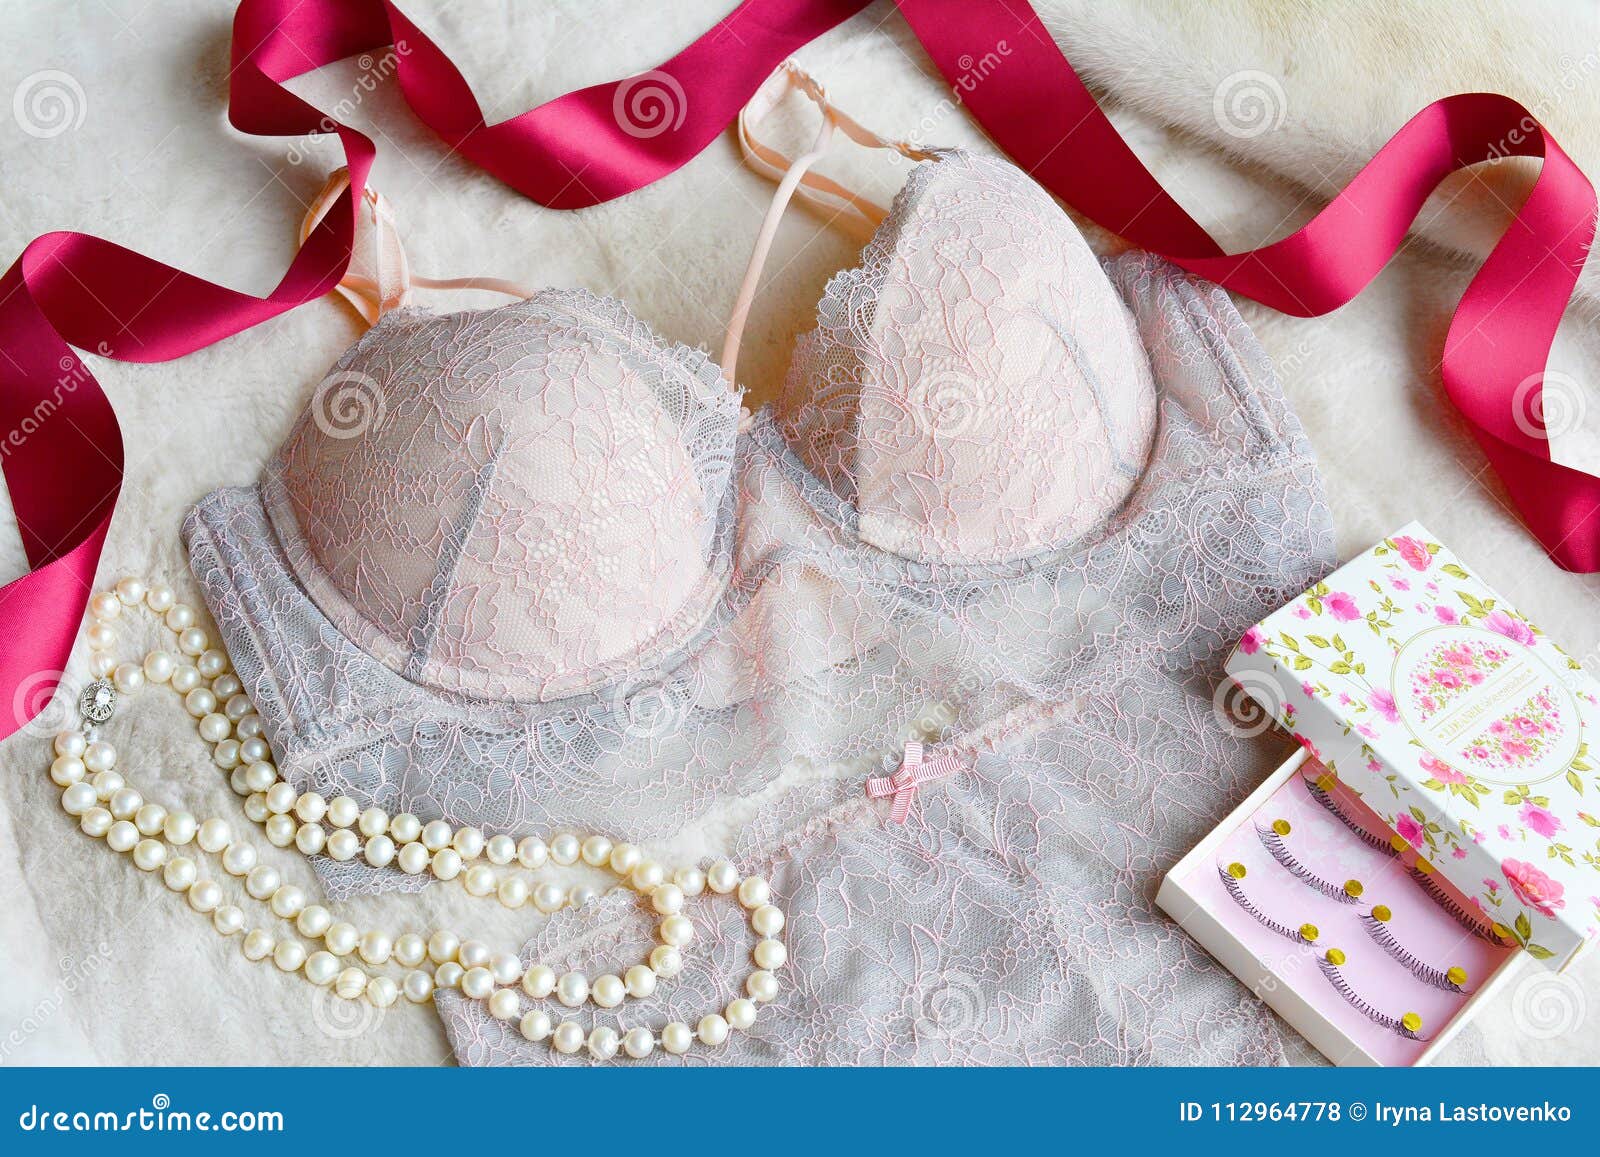 https://thumbs.dreamstime.com/z/women-s-lace-sexy-underwear-gentle-pink-color-bra-panties-women-s-lace-sexy-underwear-gentle-pink-color-bra-panties-112964778.jpg